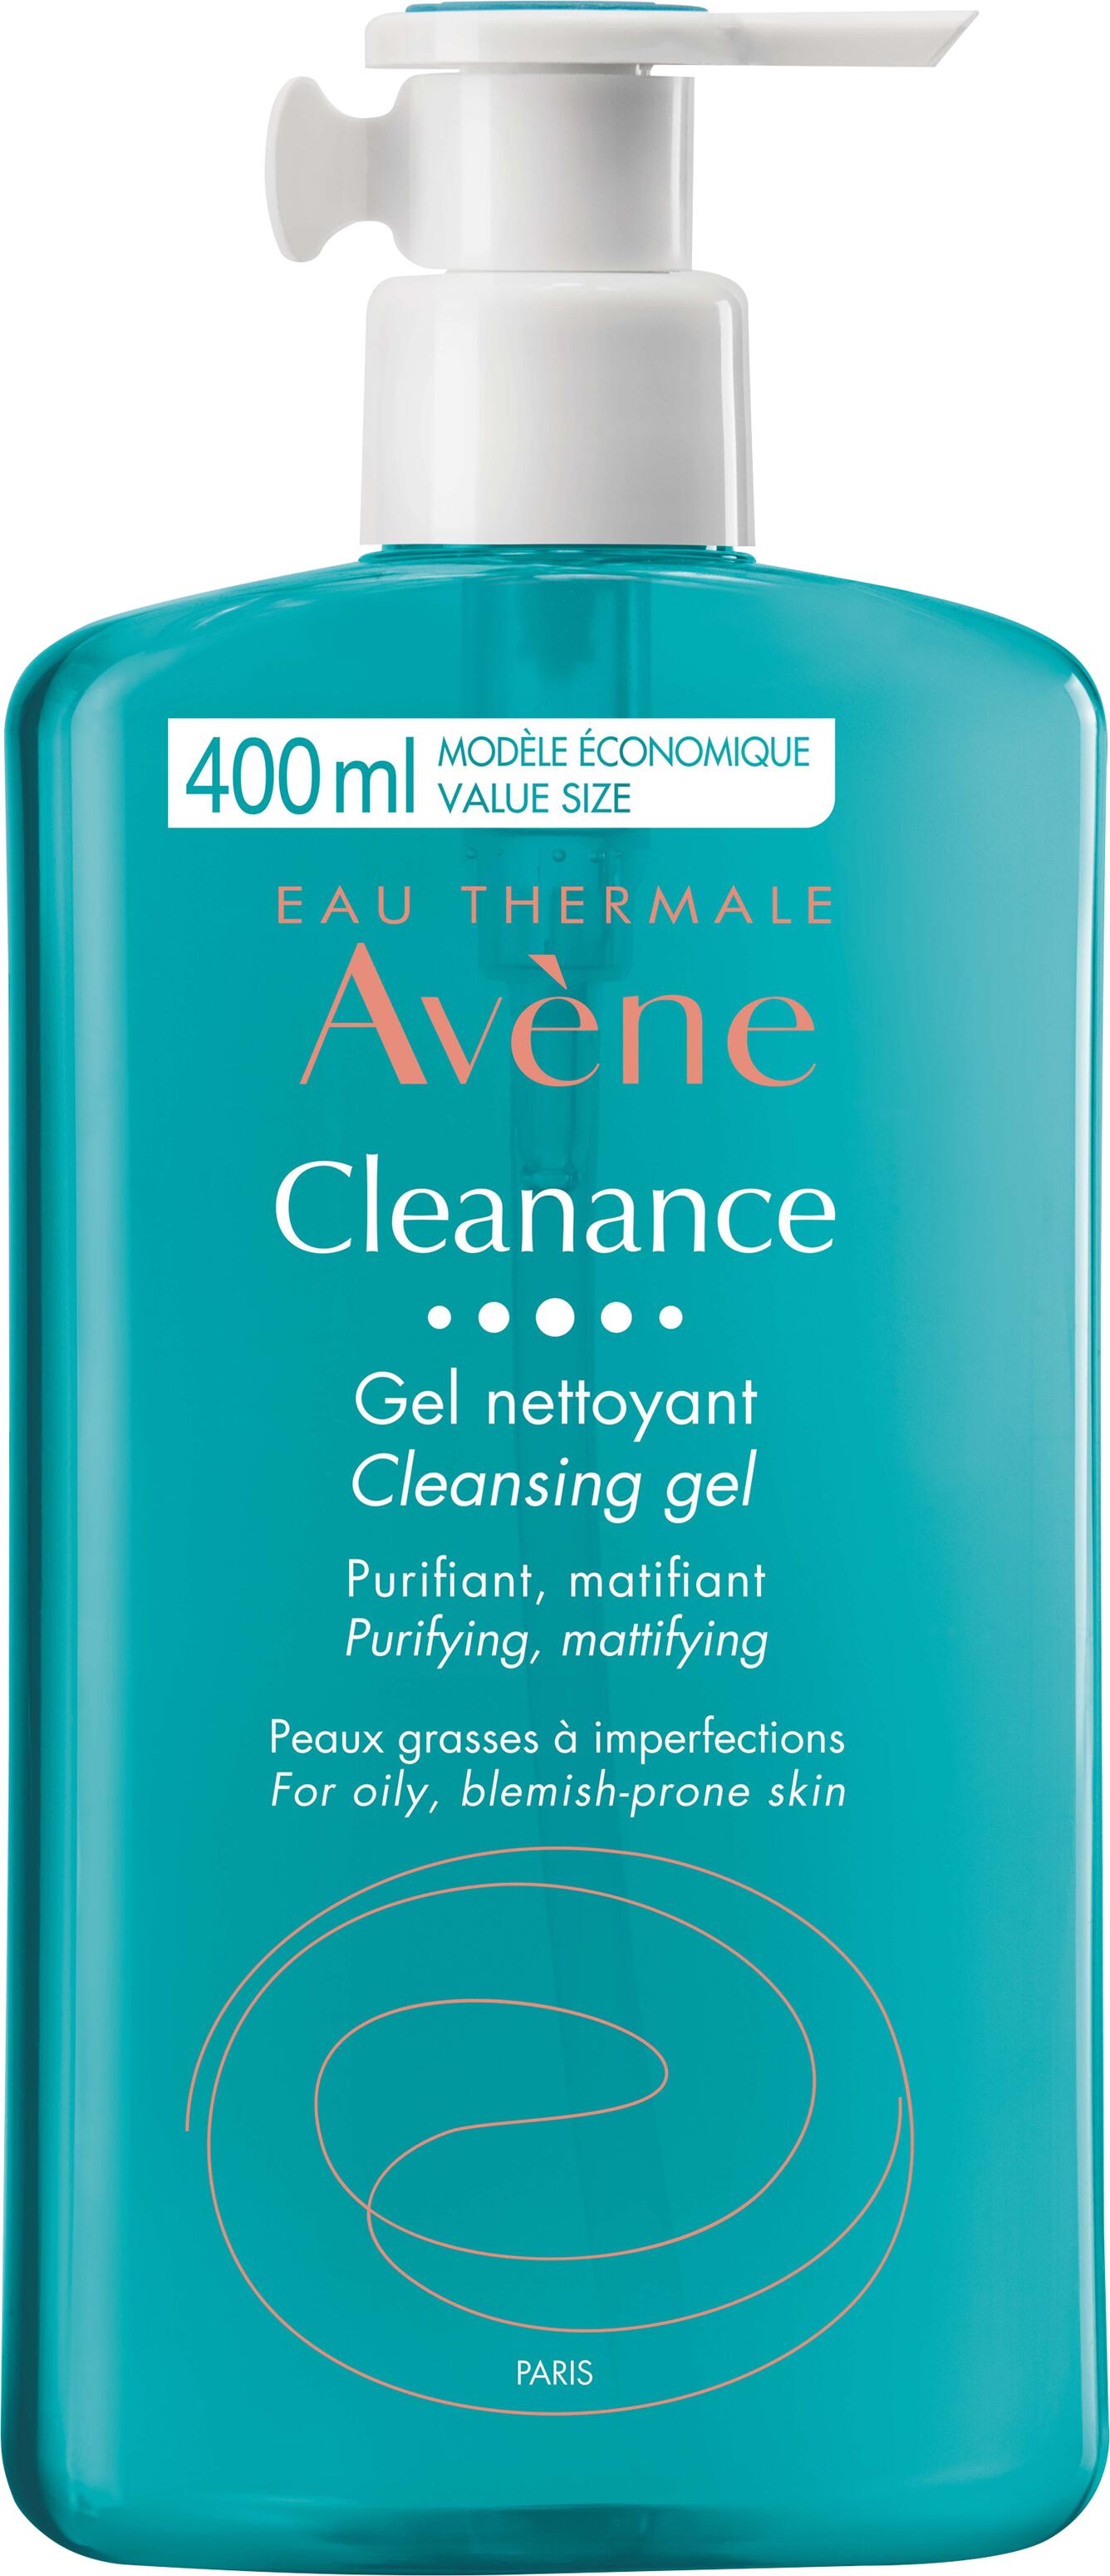 AVENE CLEANANCE GEL DE CURATARE 400ML